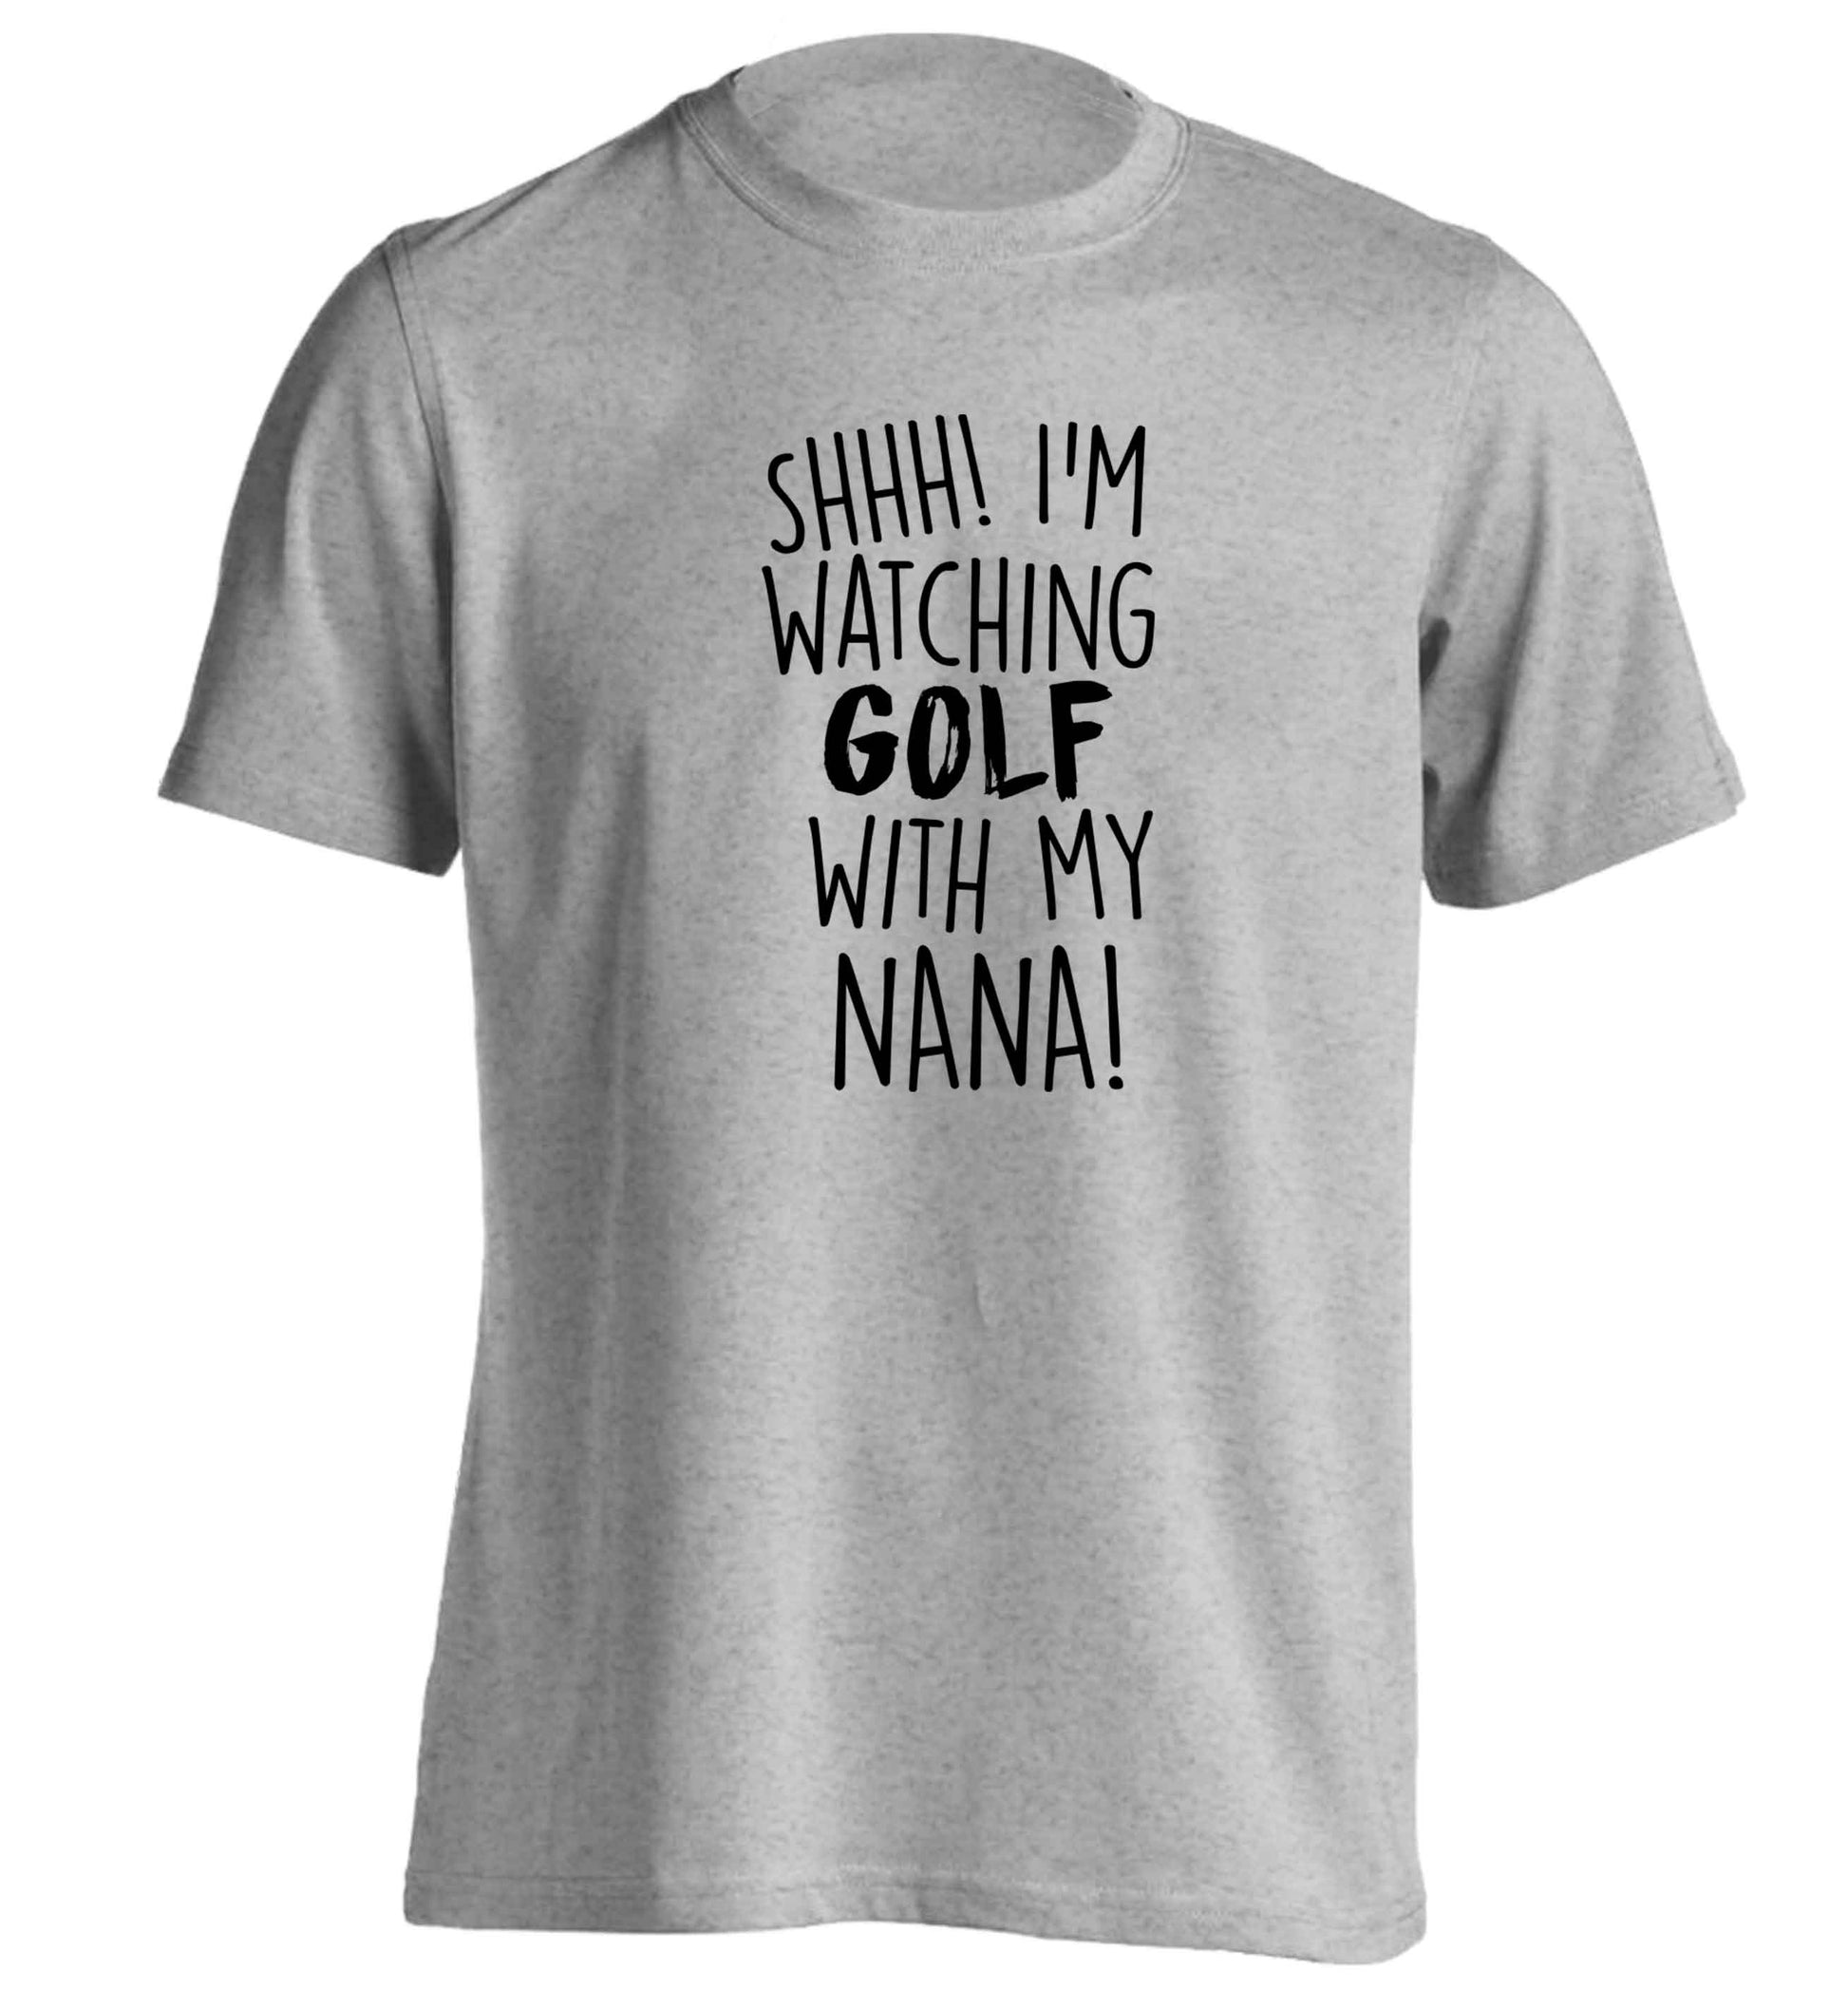 Shh I'm watching golf with my nana adults unisex grey Tshirt 2XL